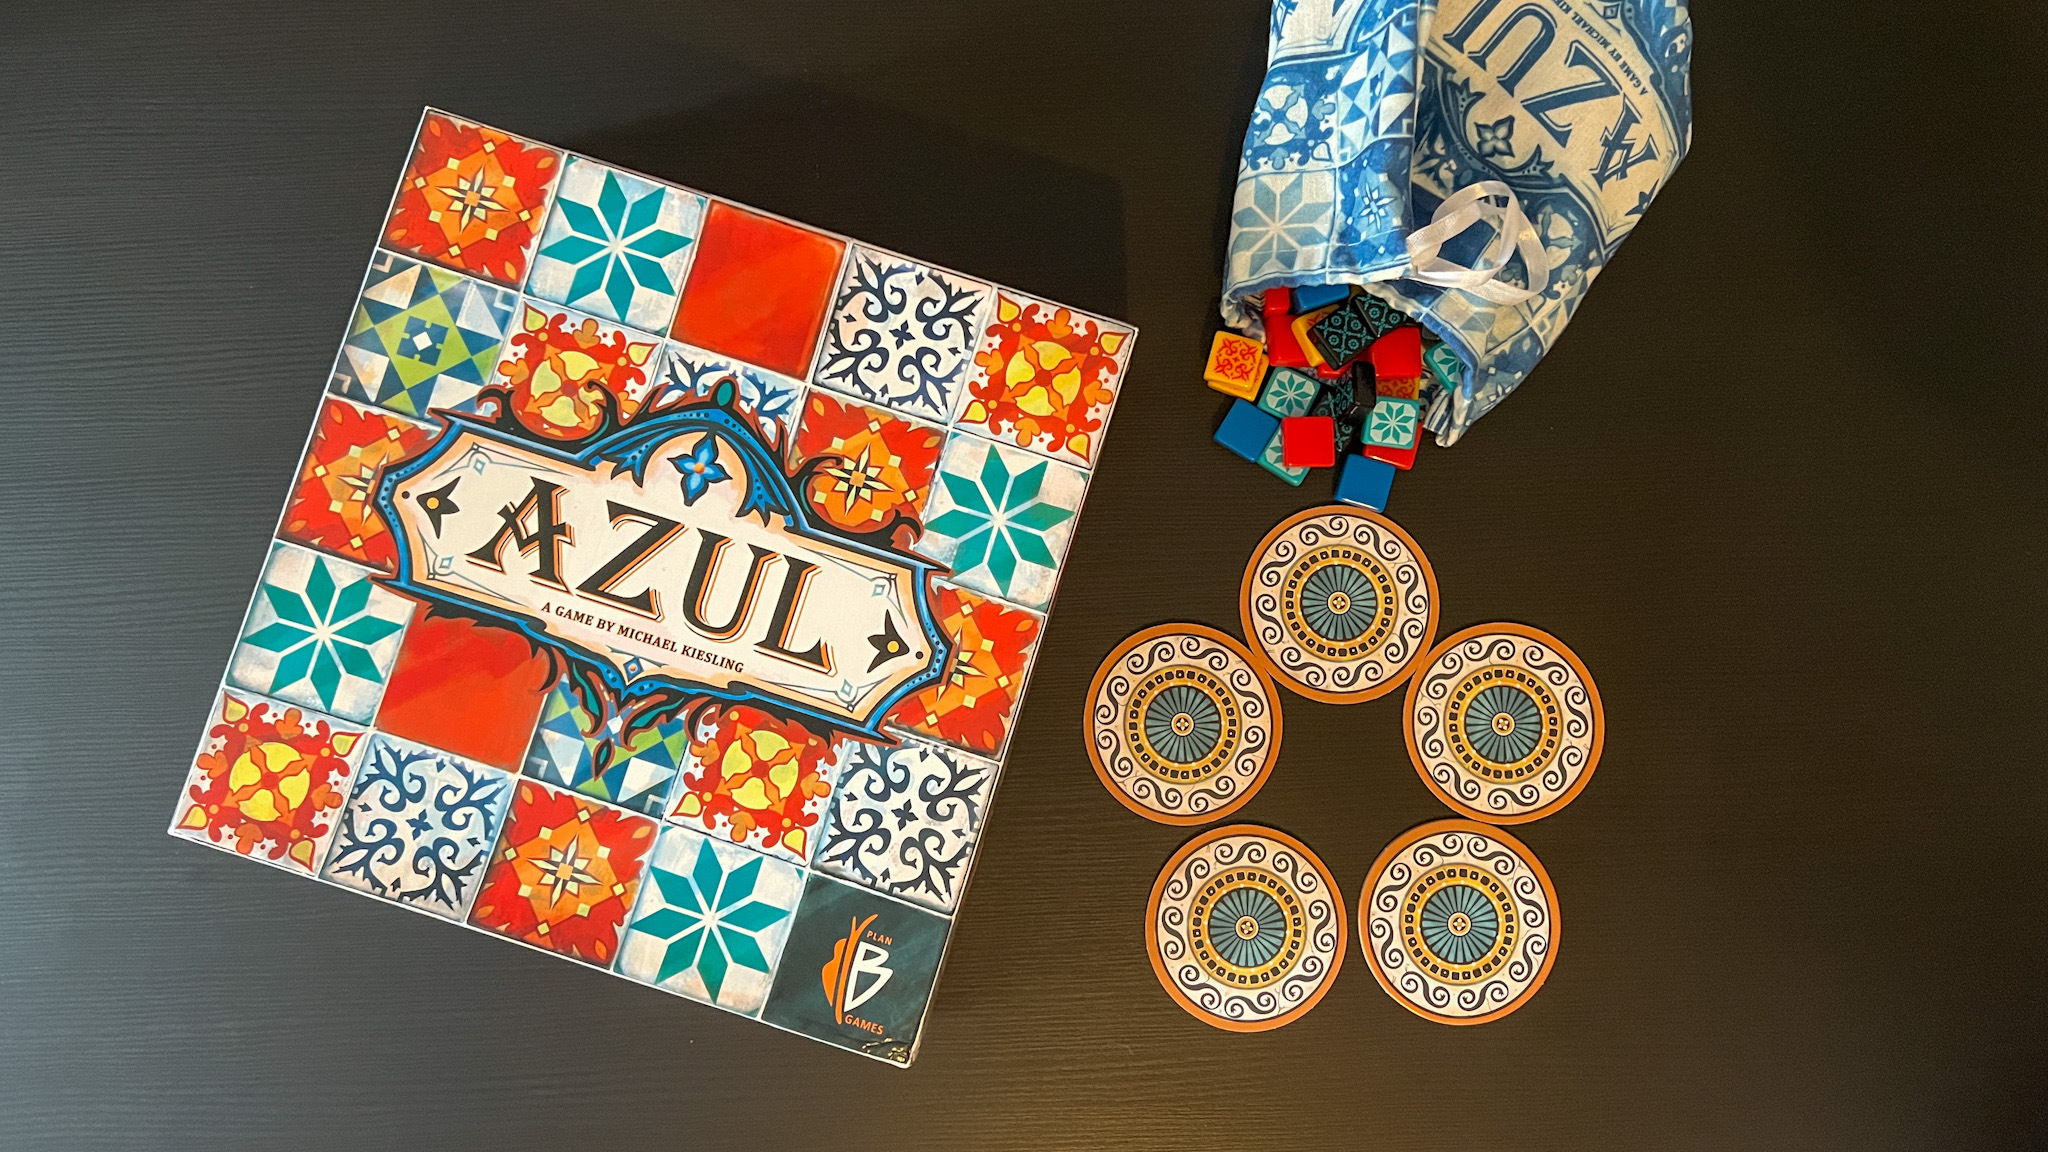 Azul review: Deceivingly simple, always evolving